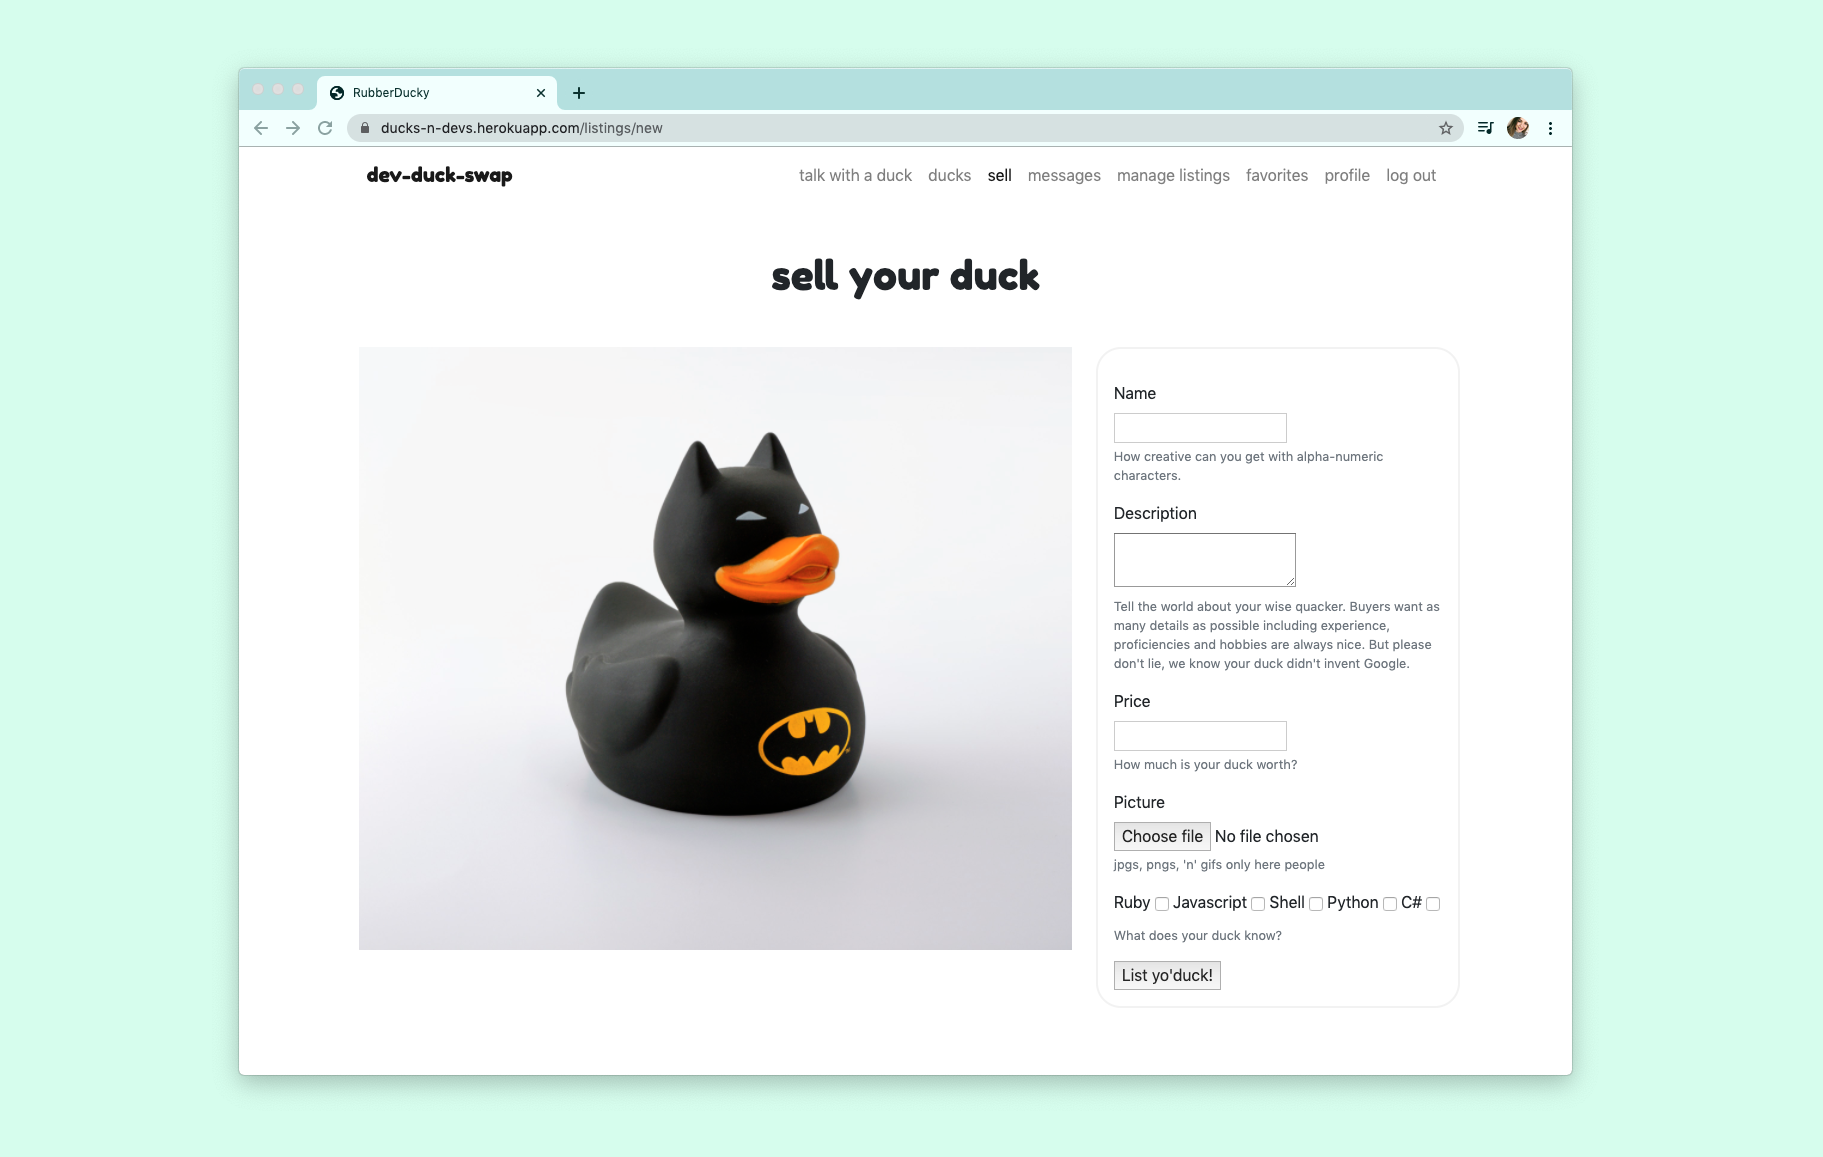 devduckswap market place make a listing page. picture of batman duck with form to enter details.